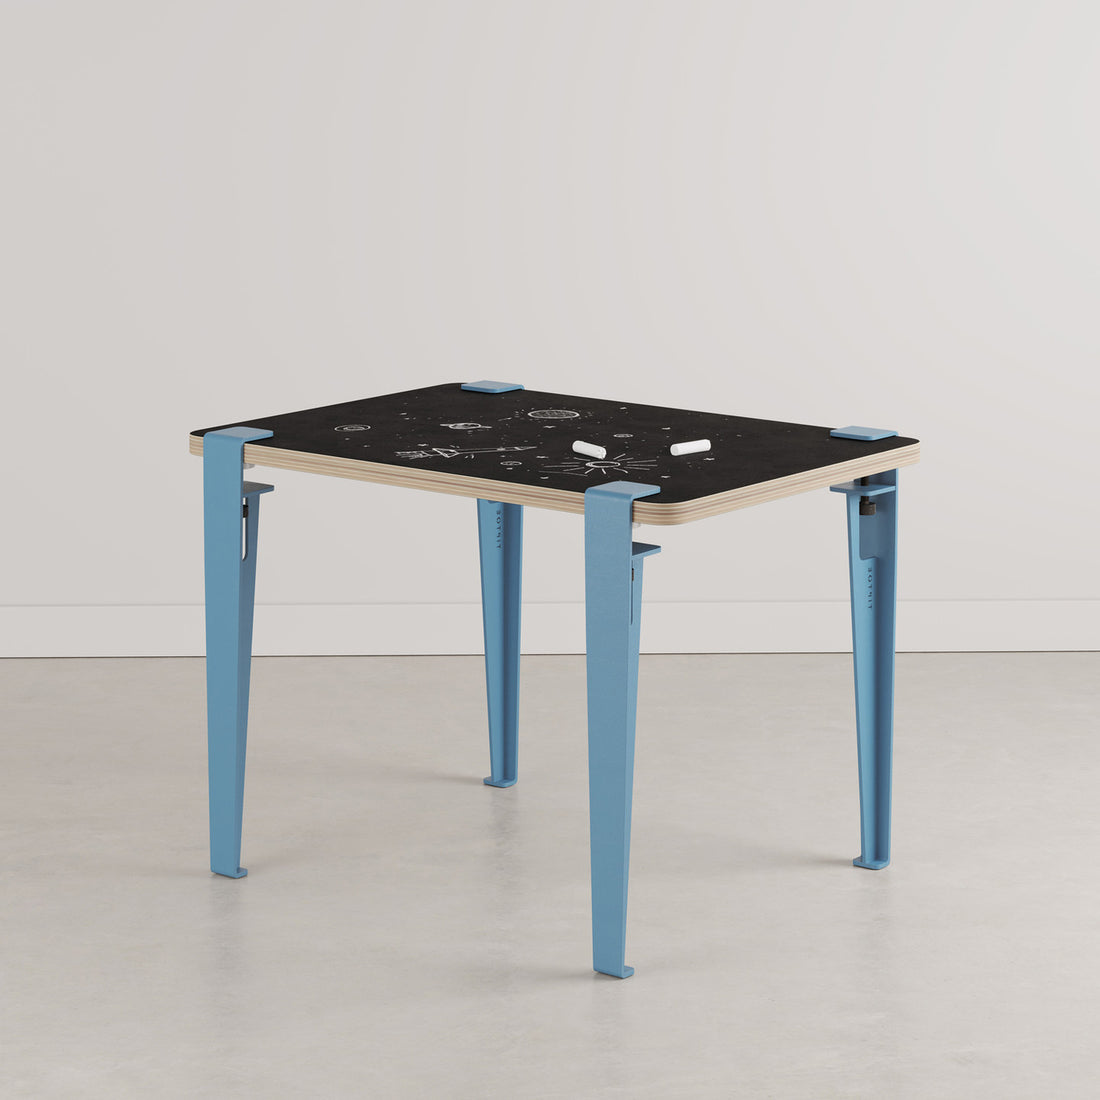 tiptoe-kids-desk-virce-versa-blackboar-&-white-tabletop-with-legs-whale-blue-70x50cm-tipt-stt07005023p02-tle050st1mz450- (1)